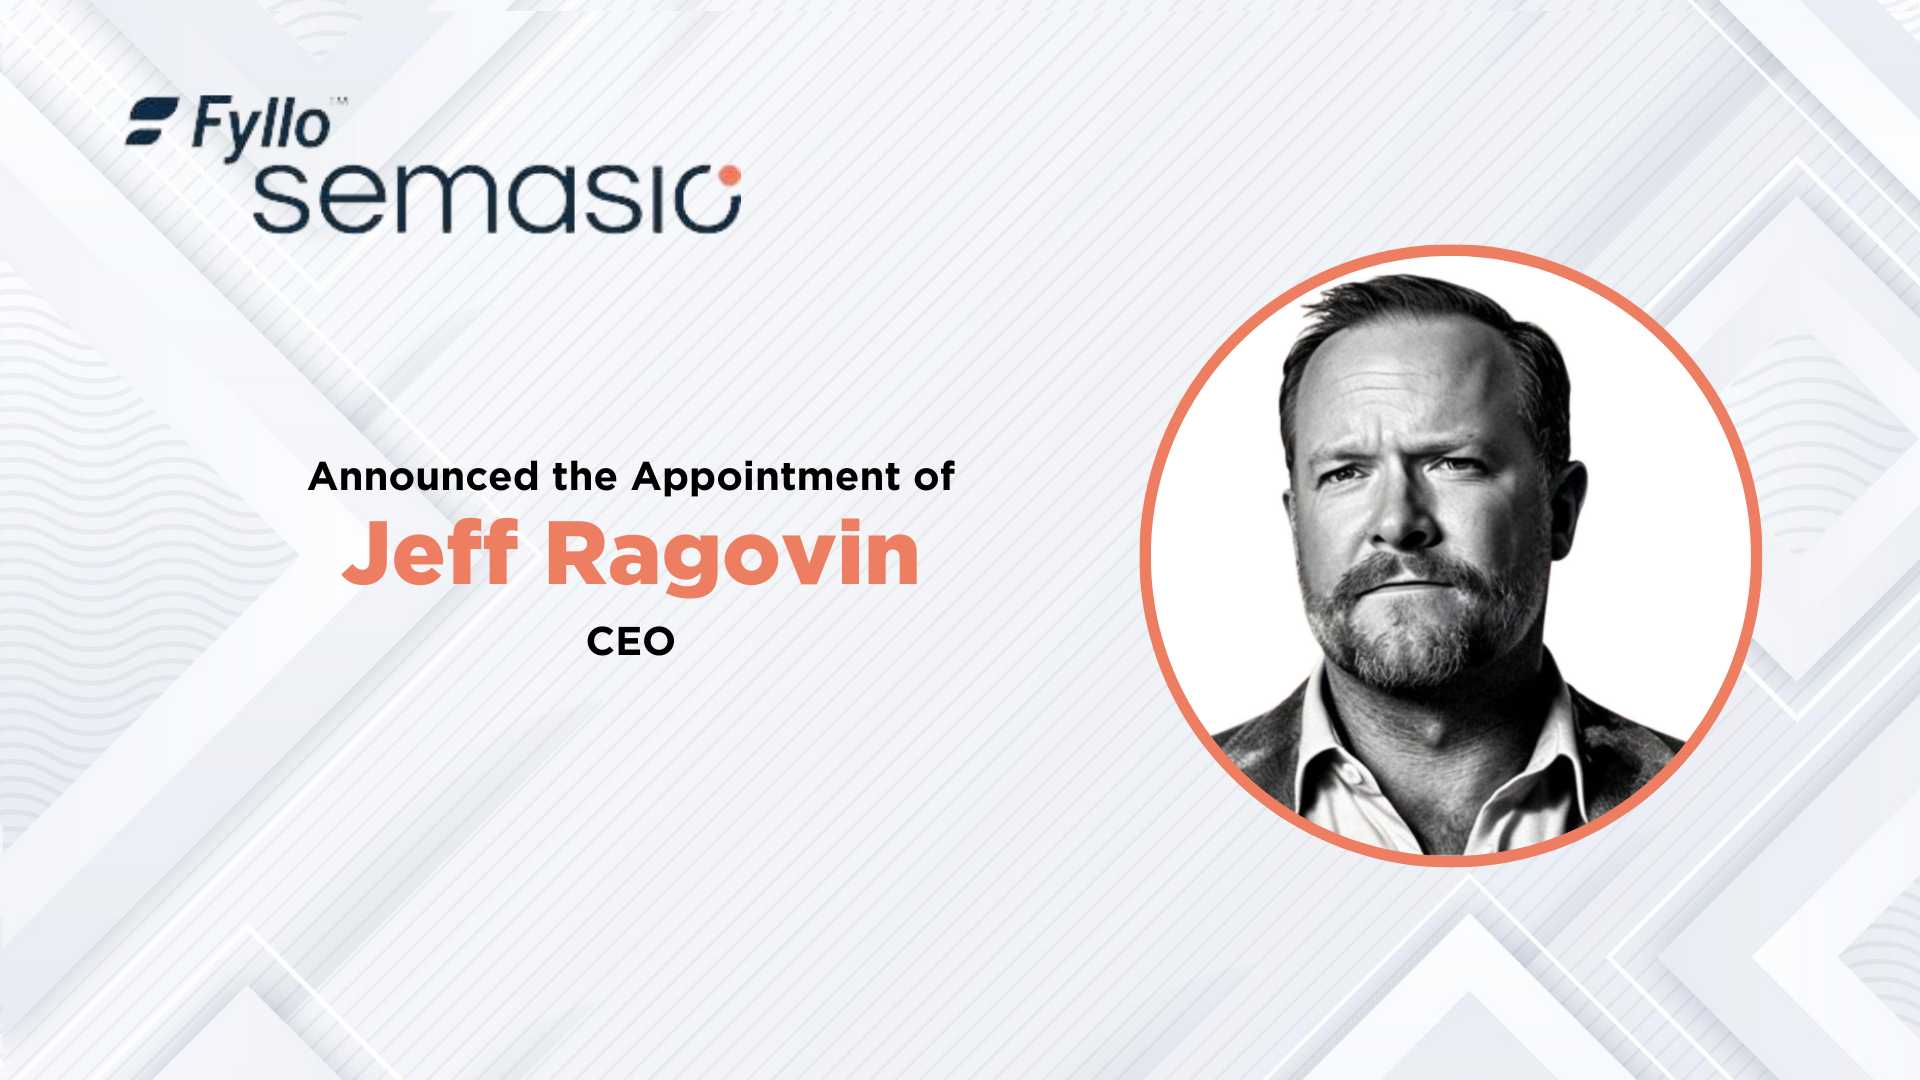 Fyllo|Semasio Names Jeff Ragovin CEO, Announces Contextual Targeting Transition